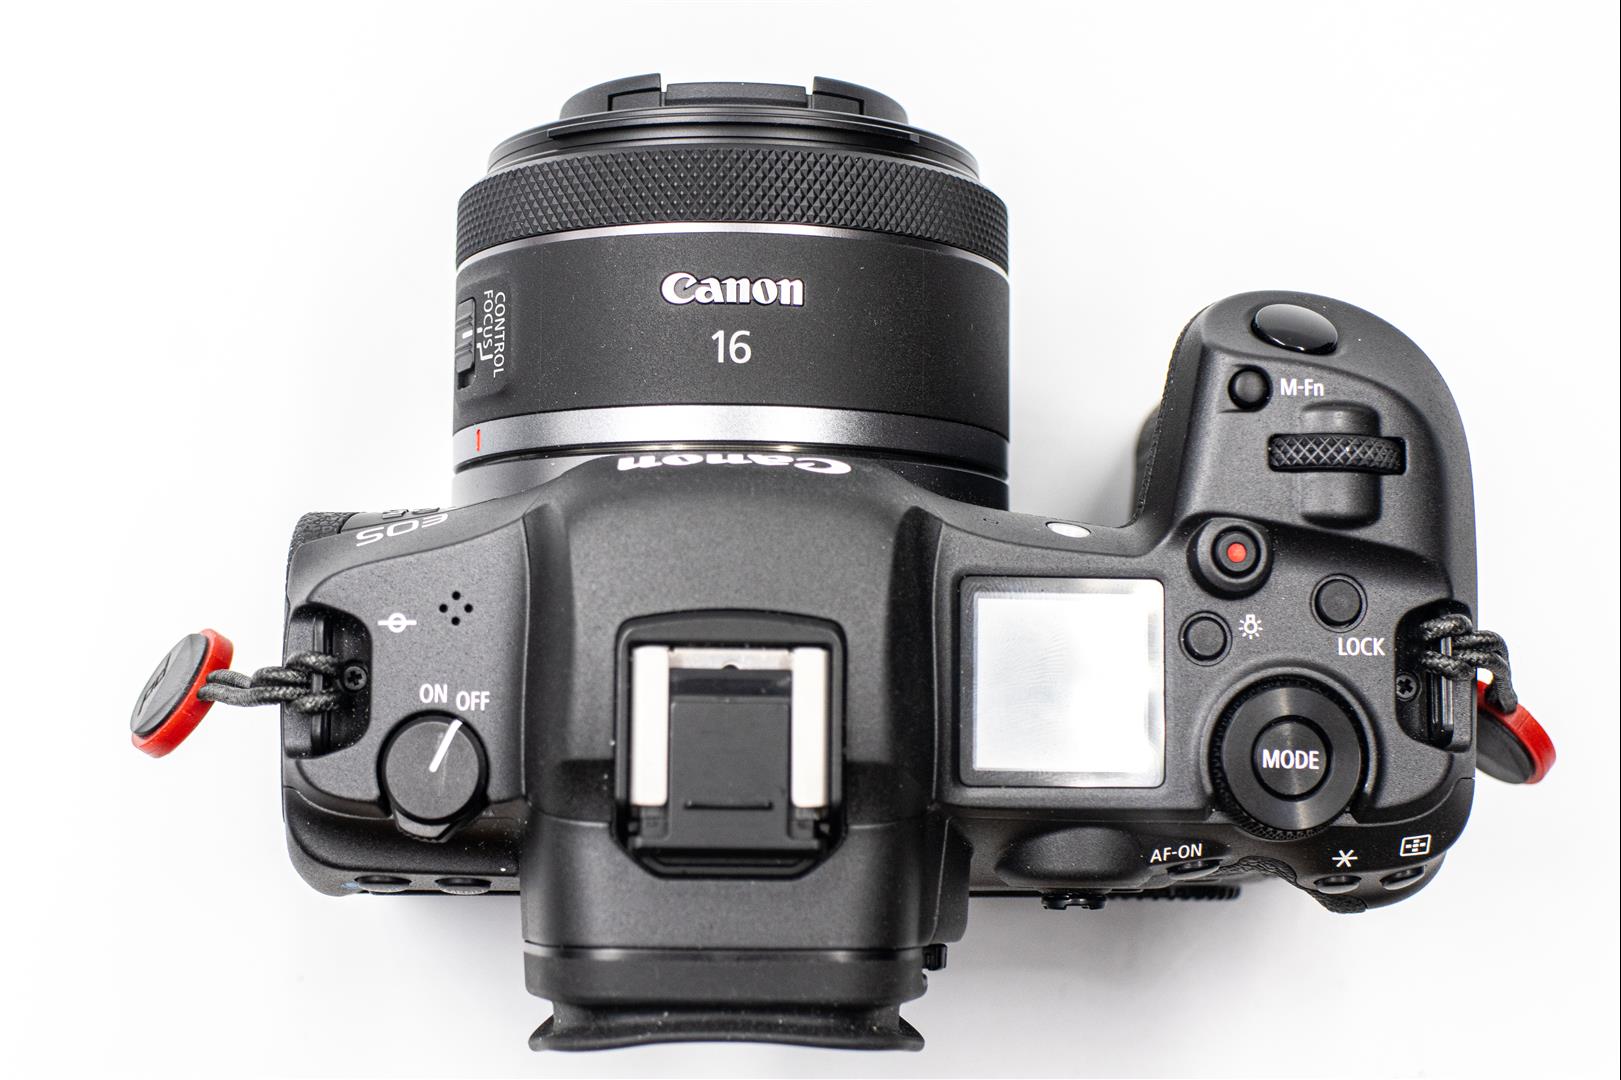 Canon RF 16mm F2.8 開箱，Canon R 系列最入門星空鏡